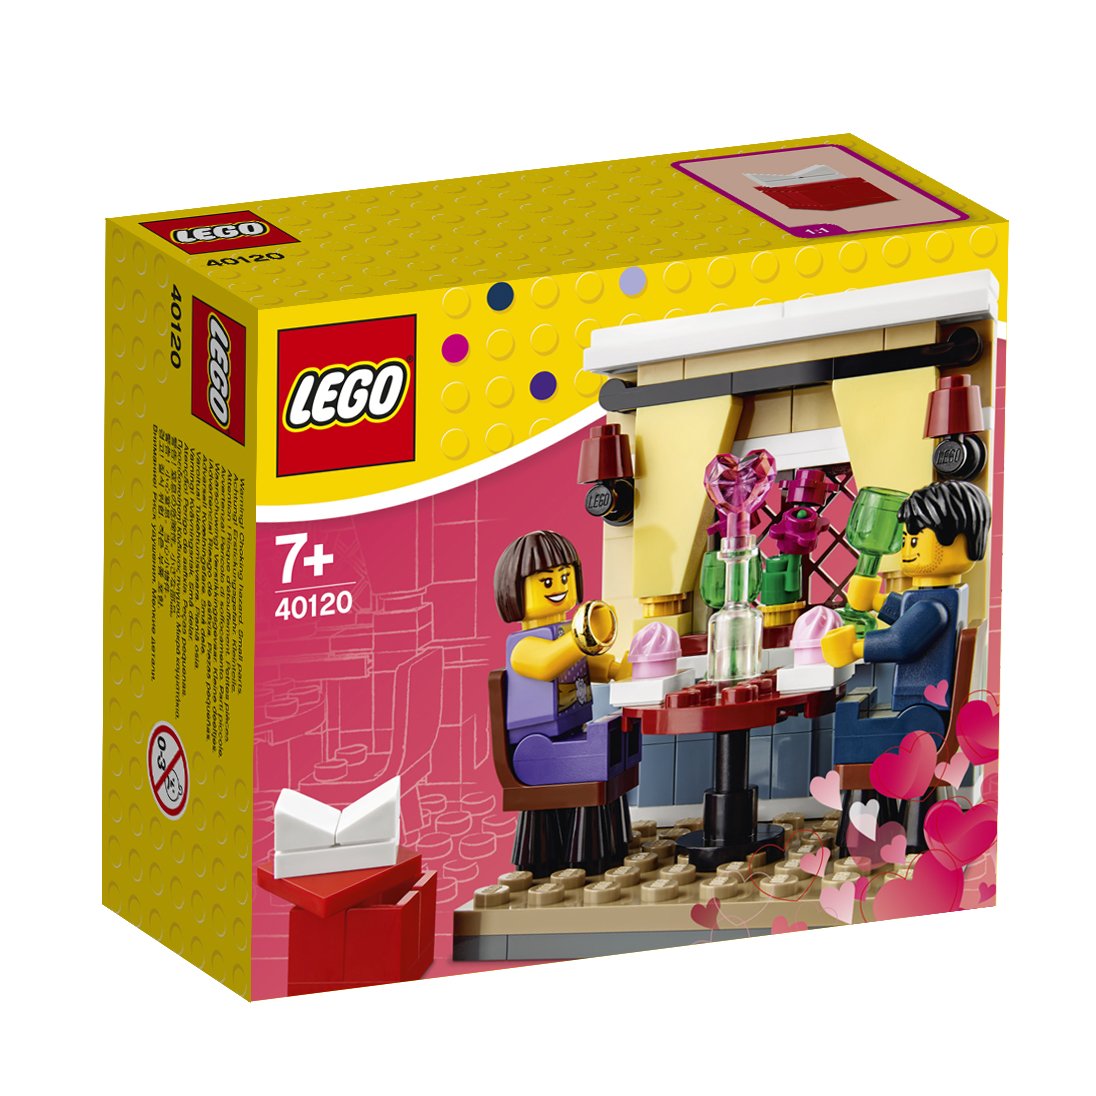 Lego 40120: Seasonal Valentine’S Day Dinner